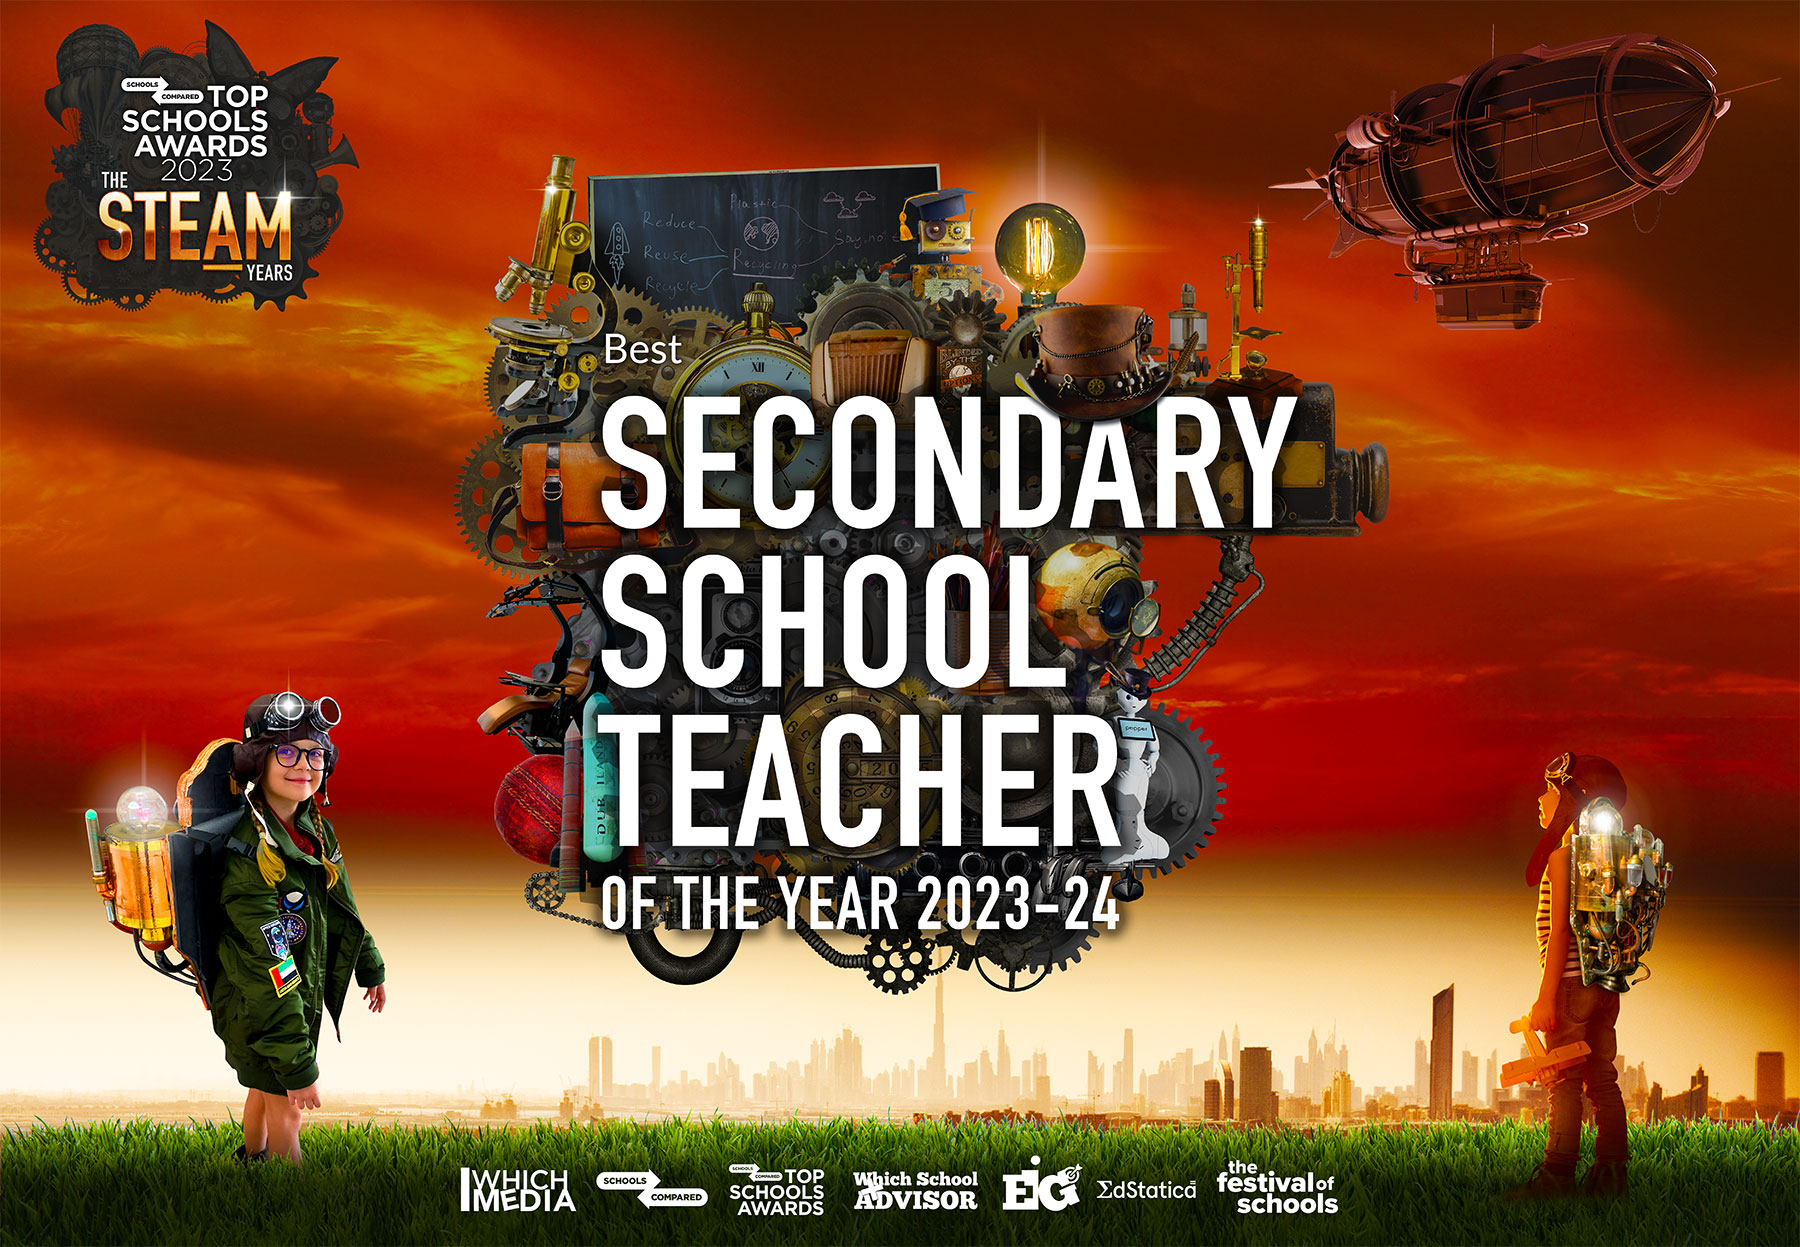 Top Schools Awards 2023. Secondary School Teacher of the Year 2023.